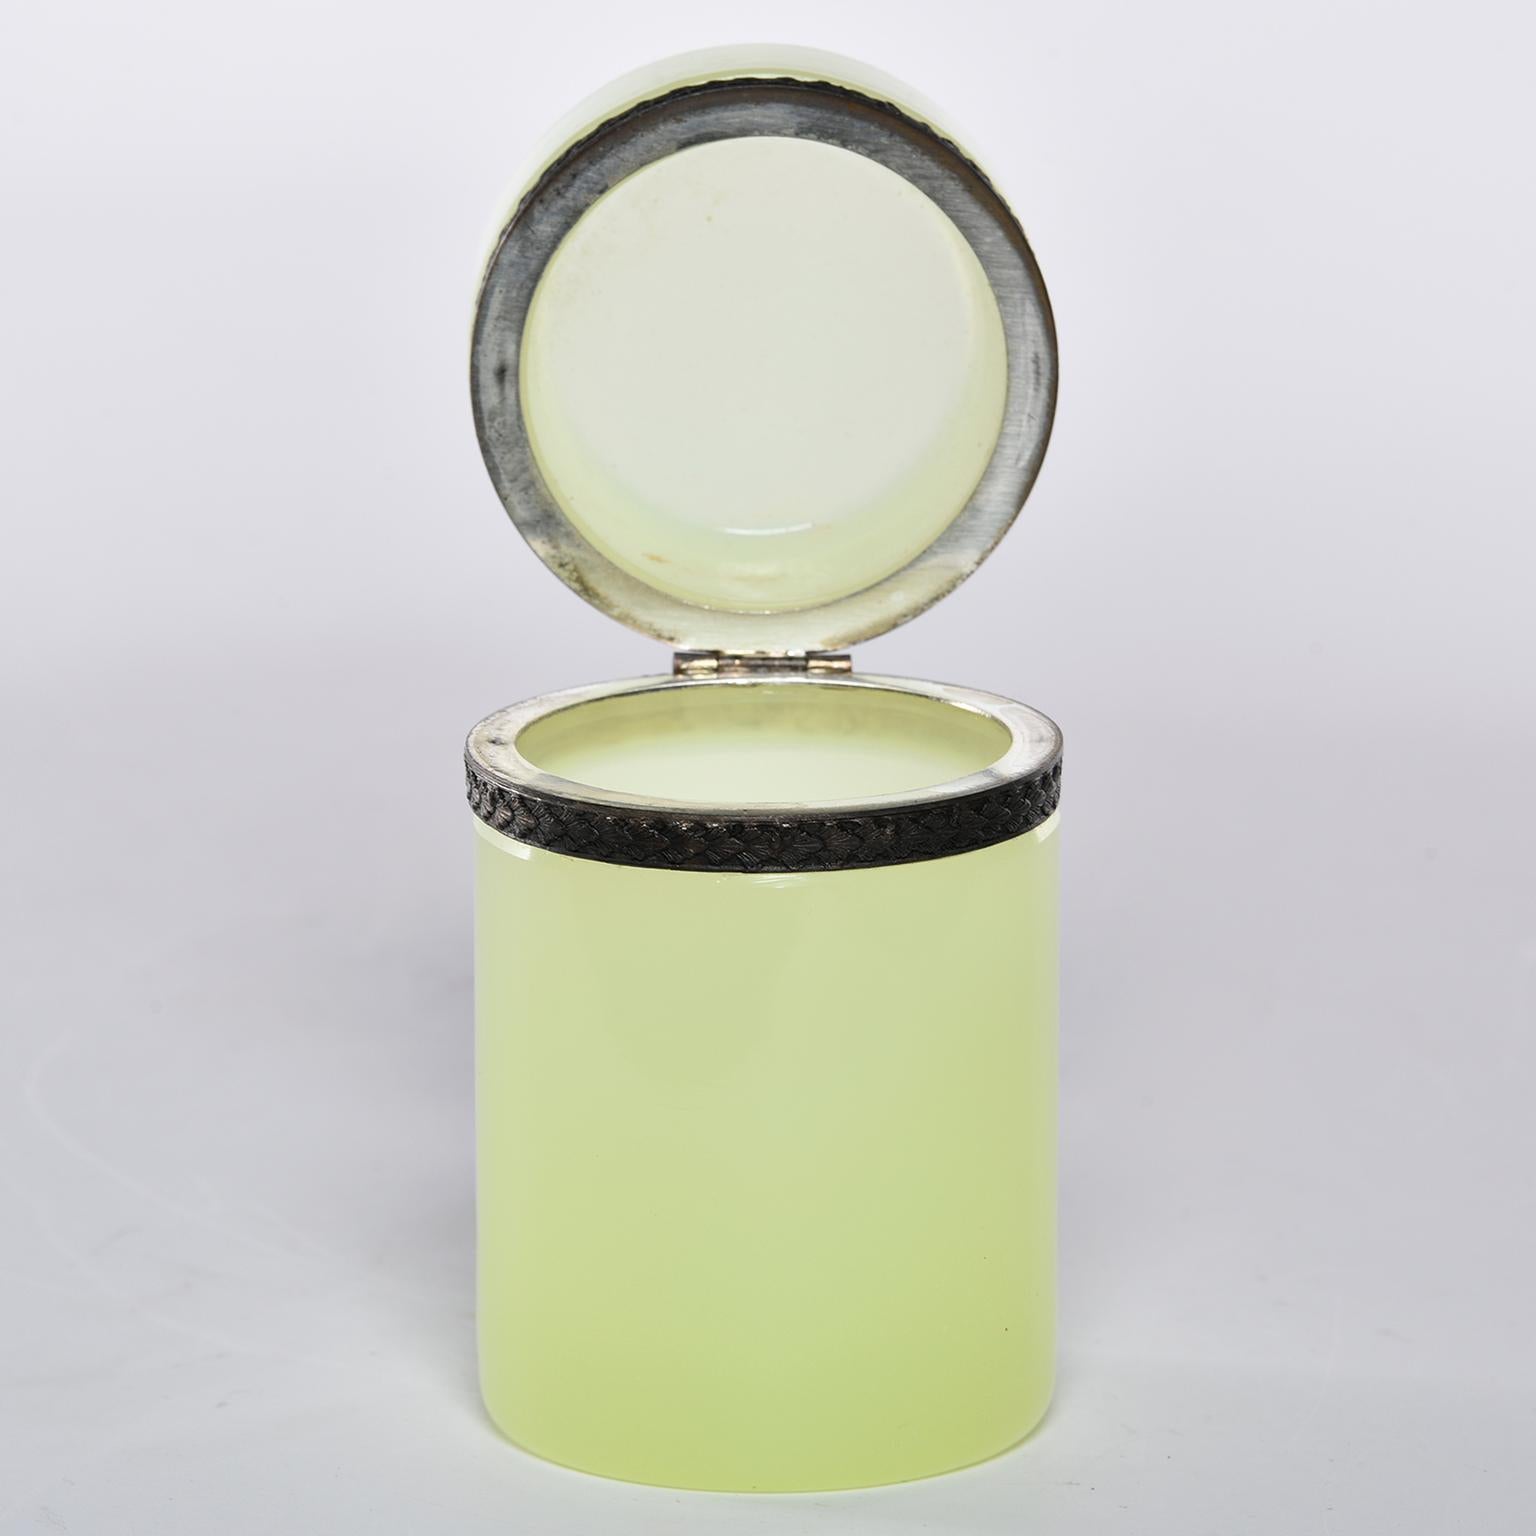 French uranium opaline glass cylindrical hinged box has brass trim. Unknown maker, circa 1920s.